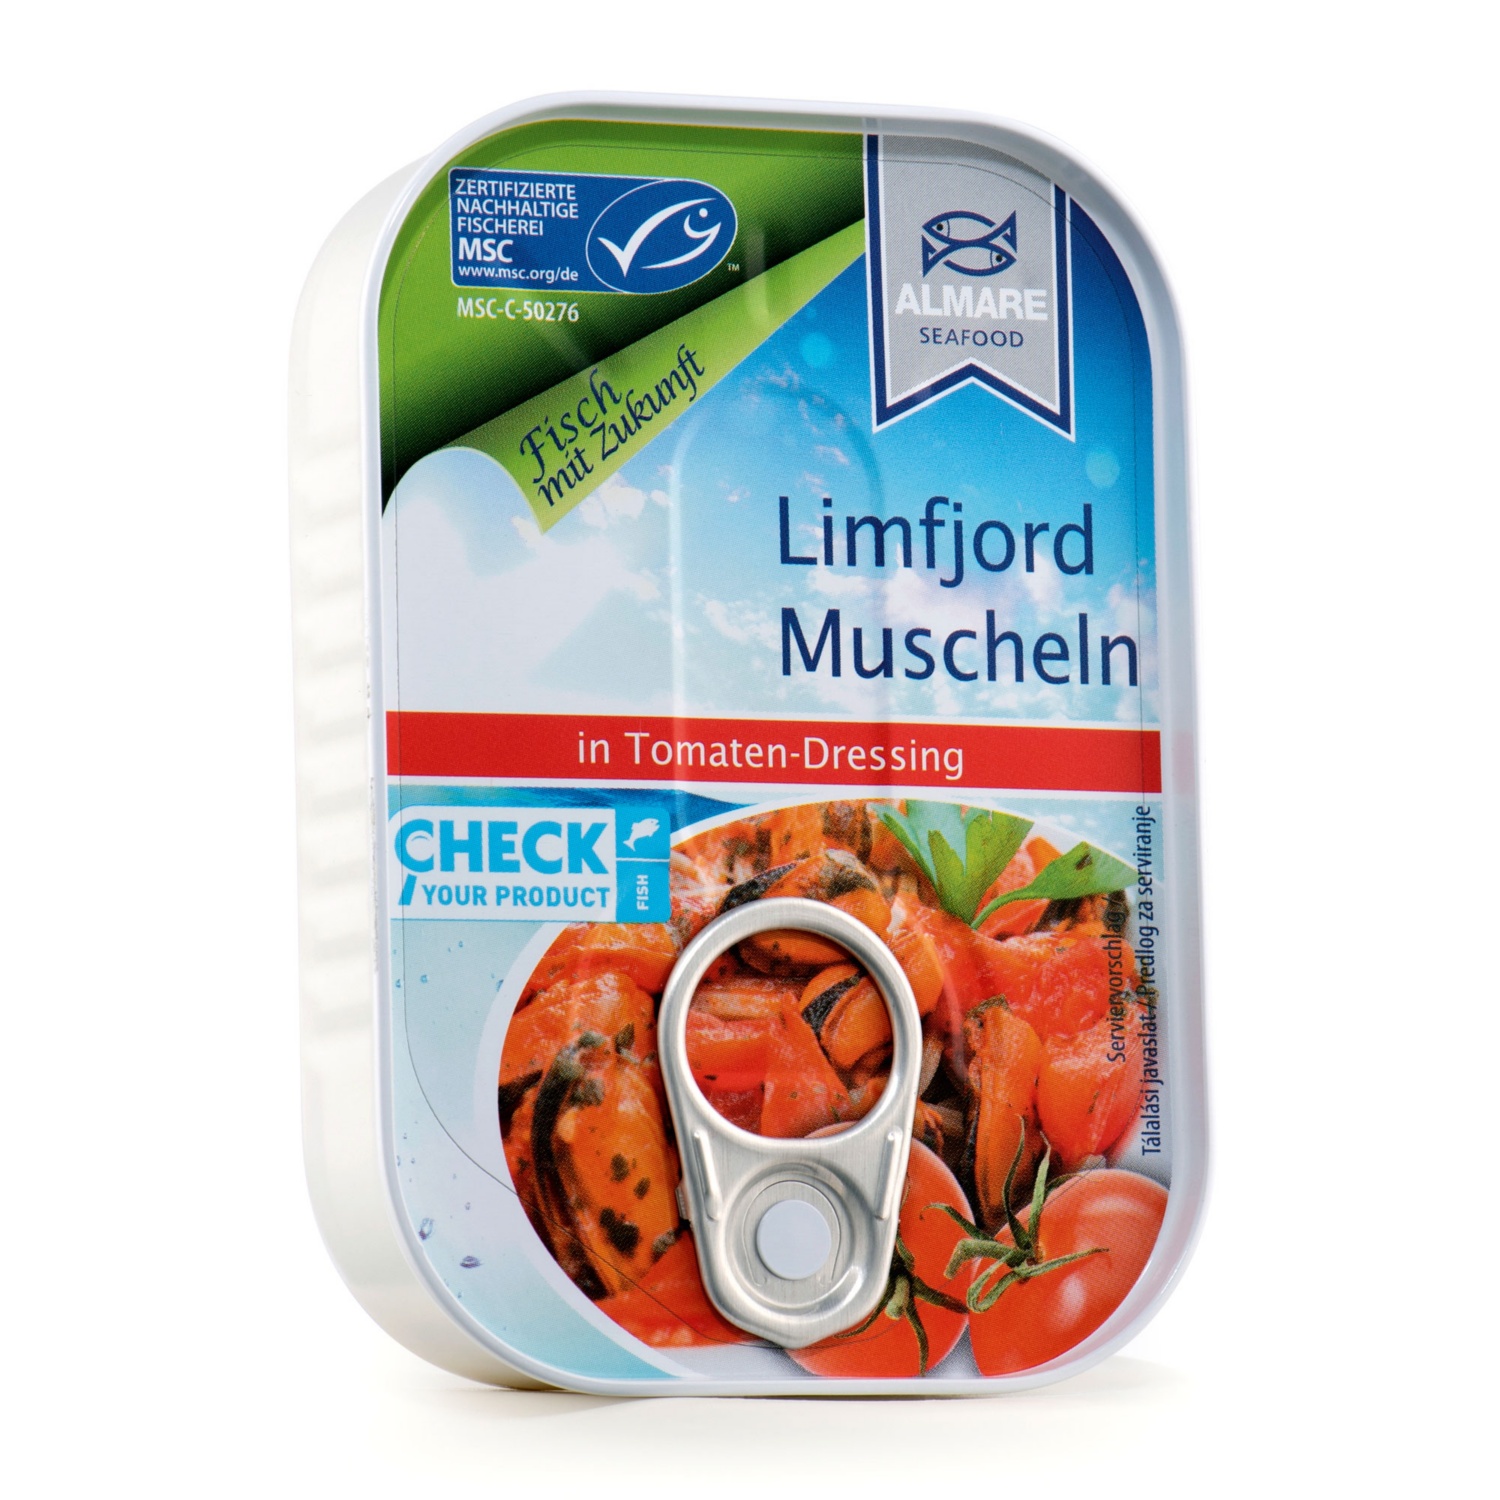 ALMARE SEAFOOD MSC Muscheln, Tomaten-Dressing